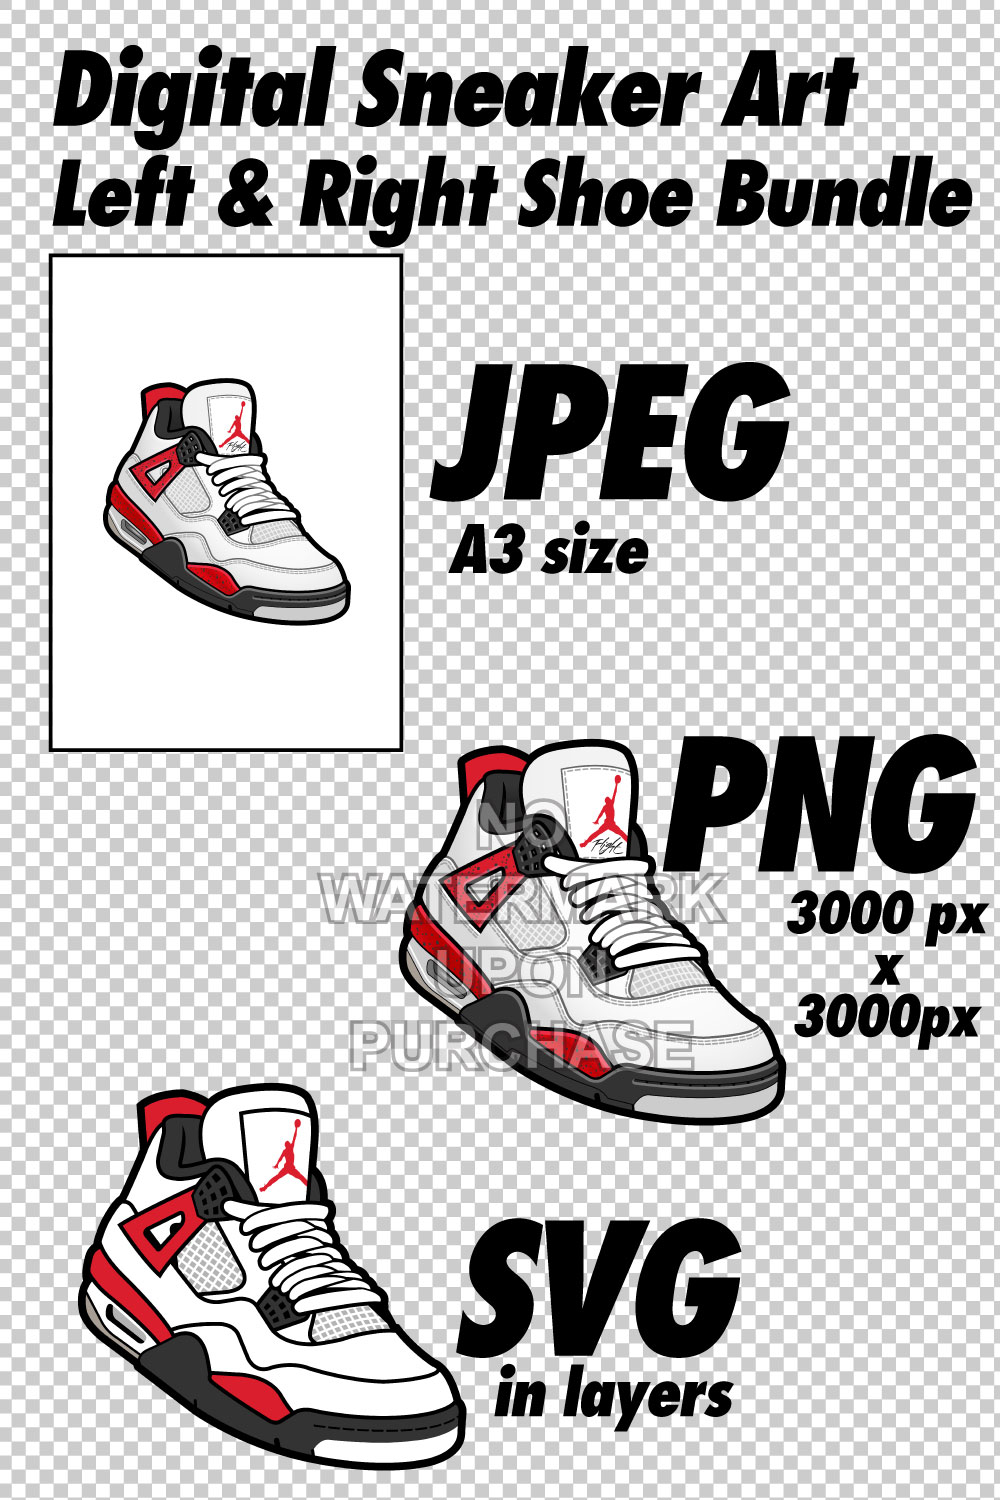 Air Jordan 4 Red Cement JPEG PNG SVG Sneaker Art Left & Right Shoe Bundle Digital Download pinterest preview image.